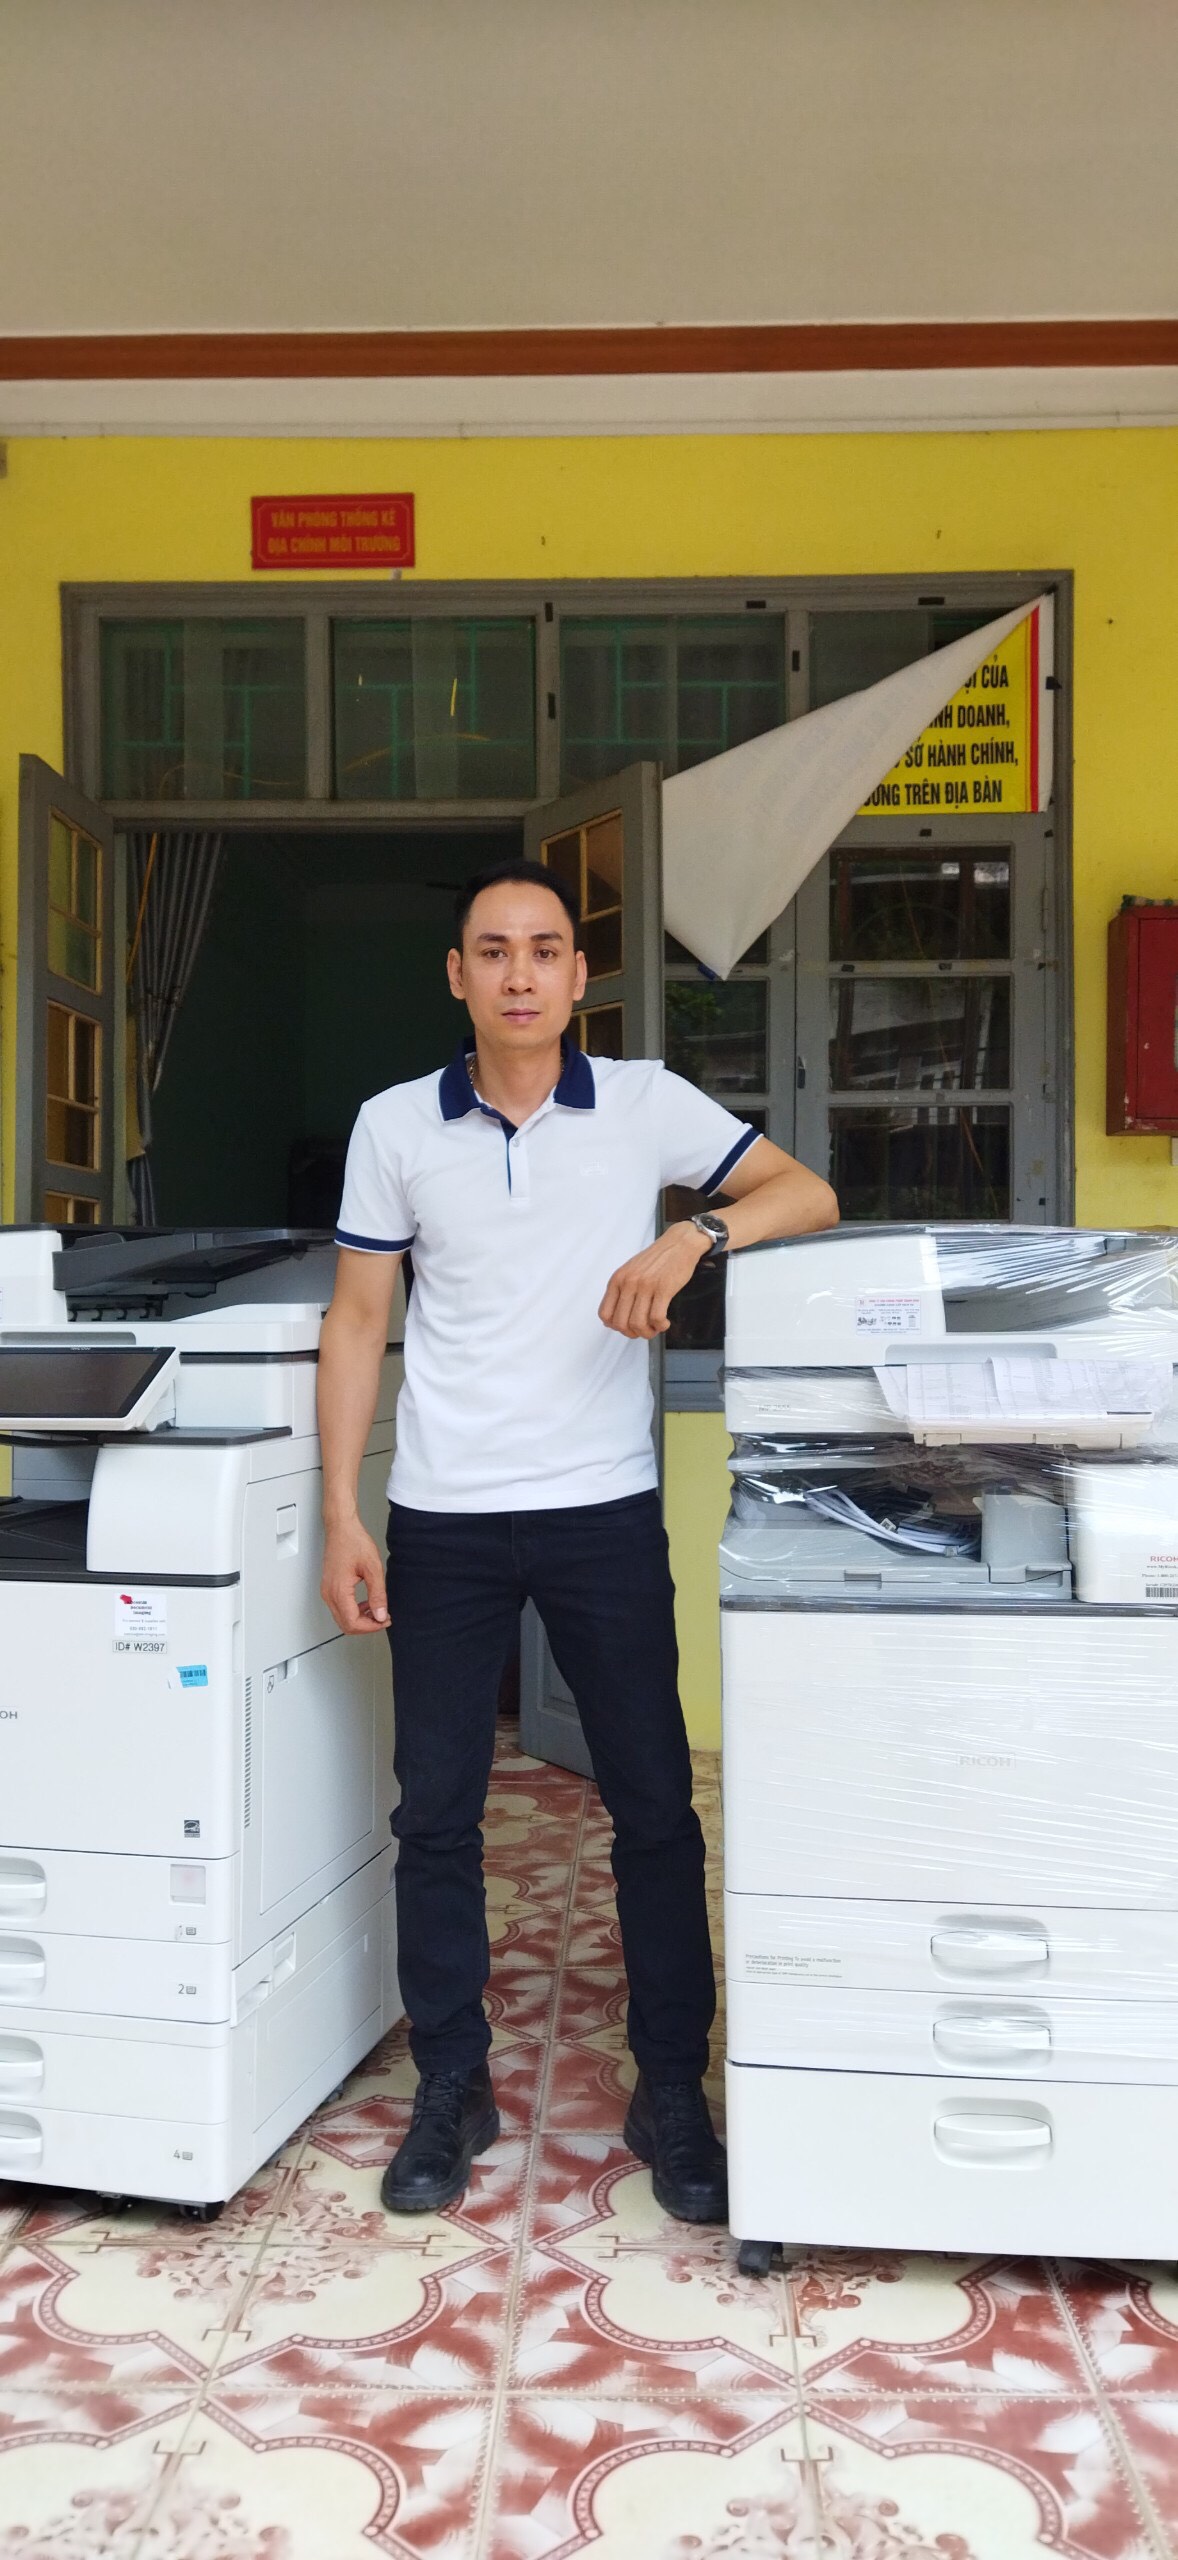 Cho thuê máy photocopy, bán máy photocopy tại Thanh Hóa giá rẻ